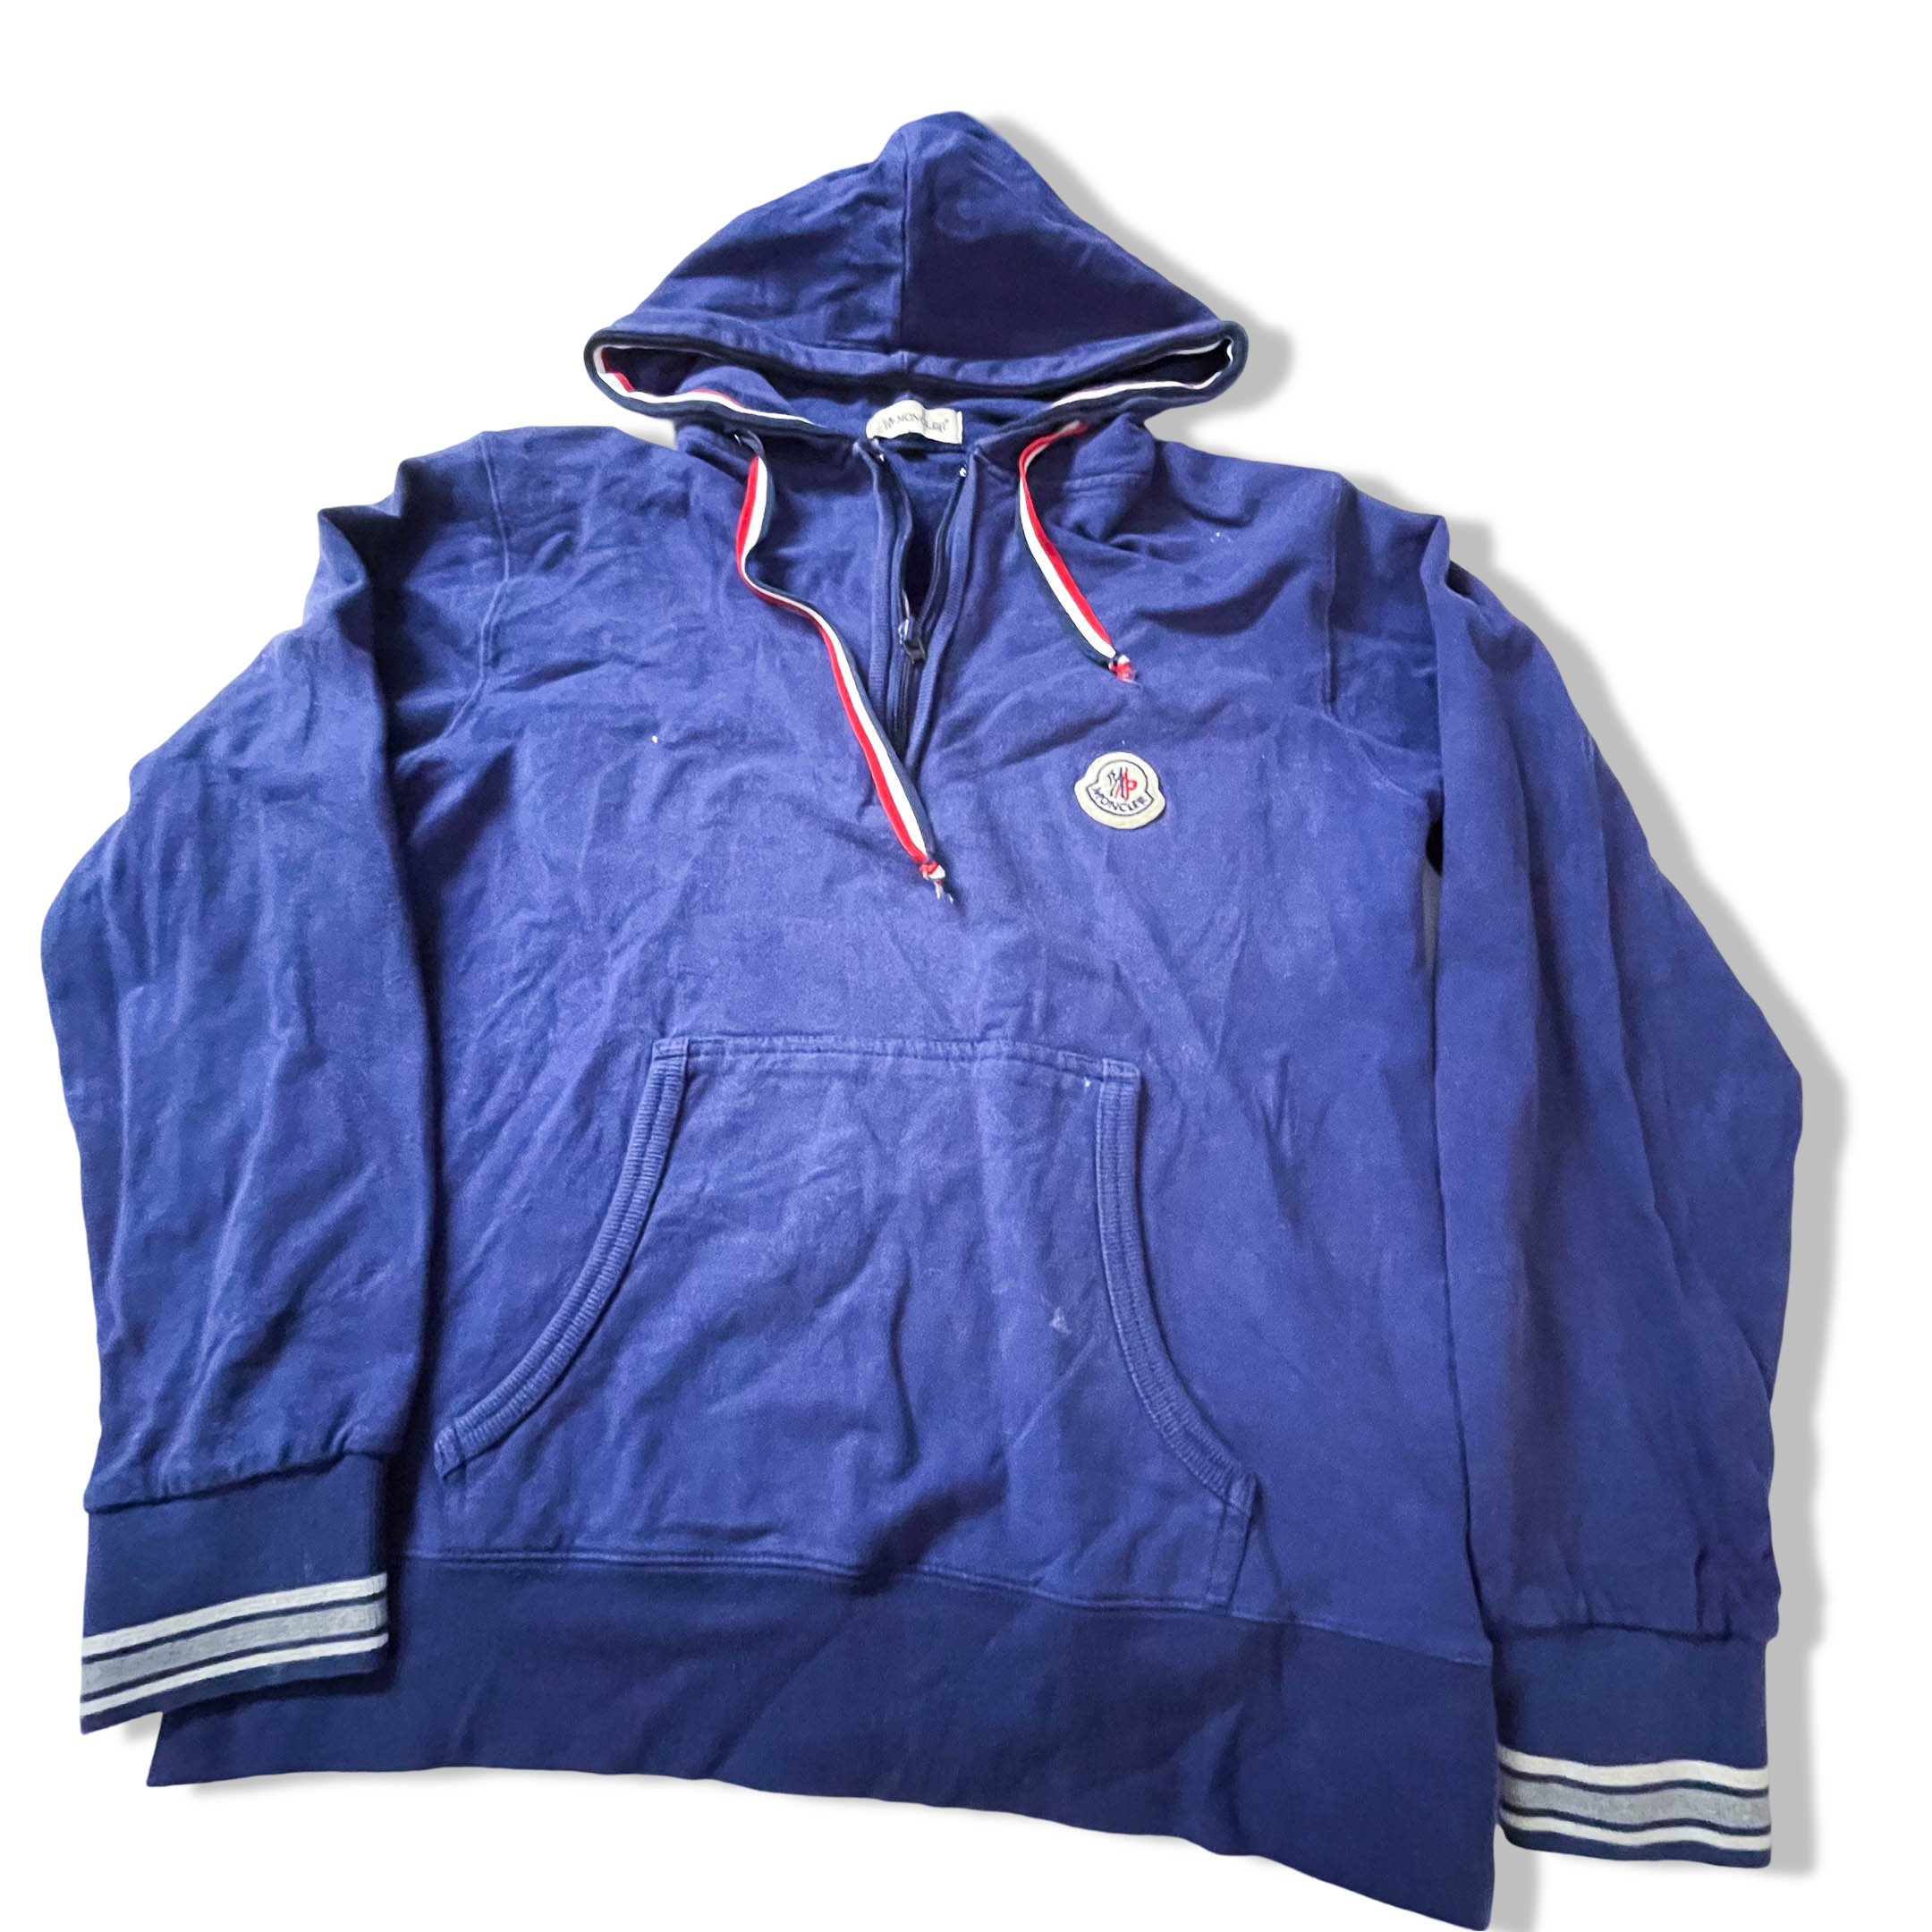 Vintage women's blue Moncler hoodies in M| L 22 W 19| SKU 2859